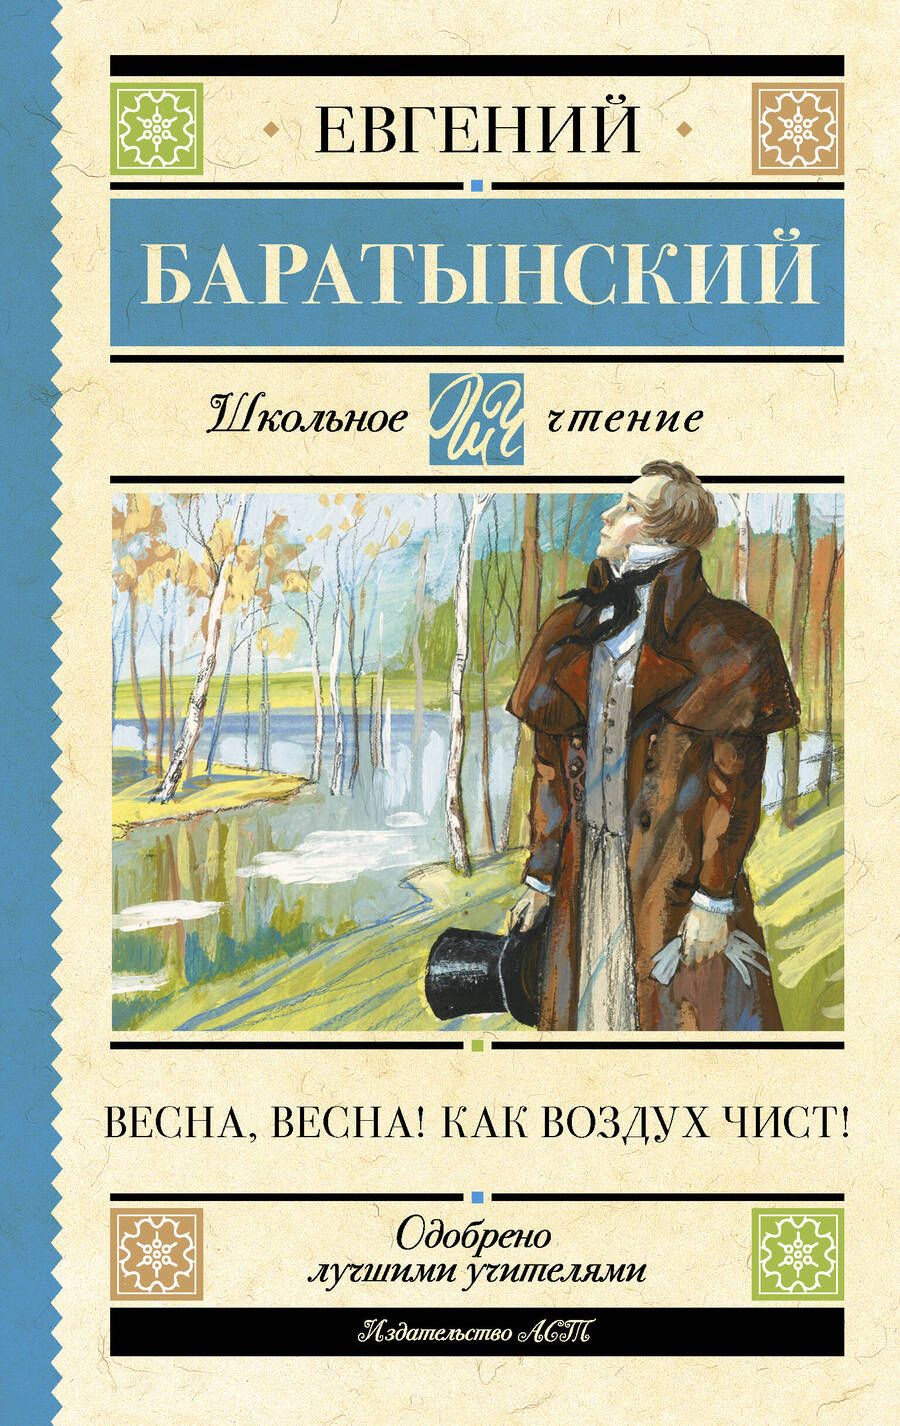 Обложка книги "Баратынский: Весна, весна! Как воздух чист!"